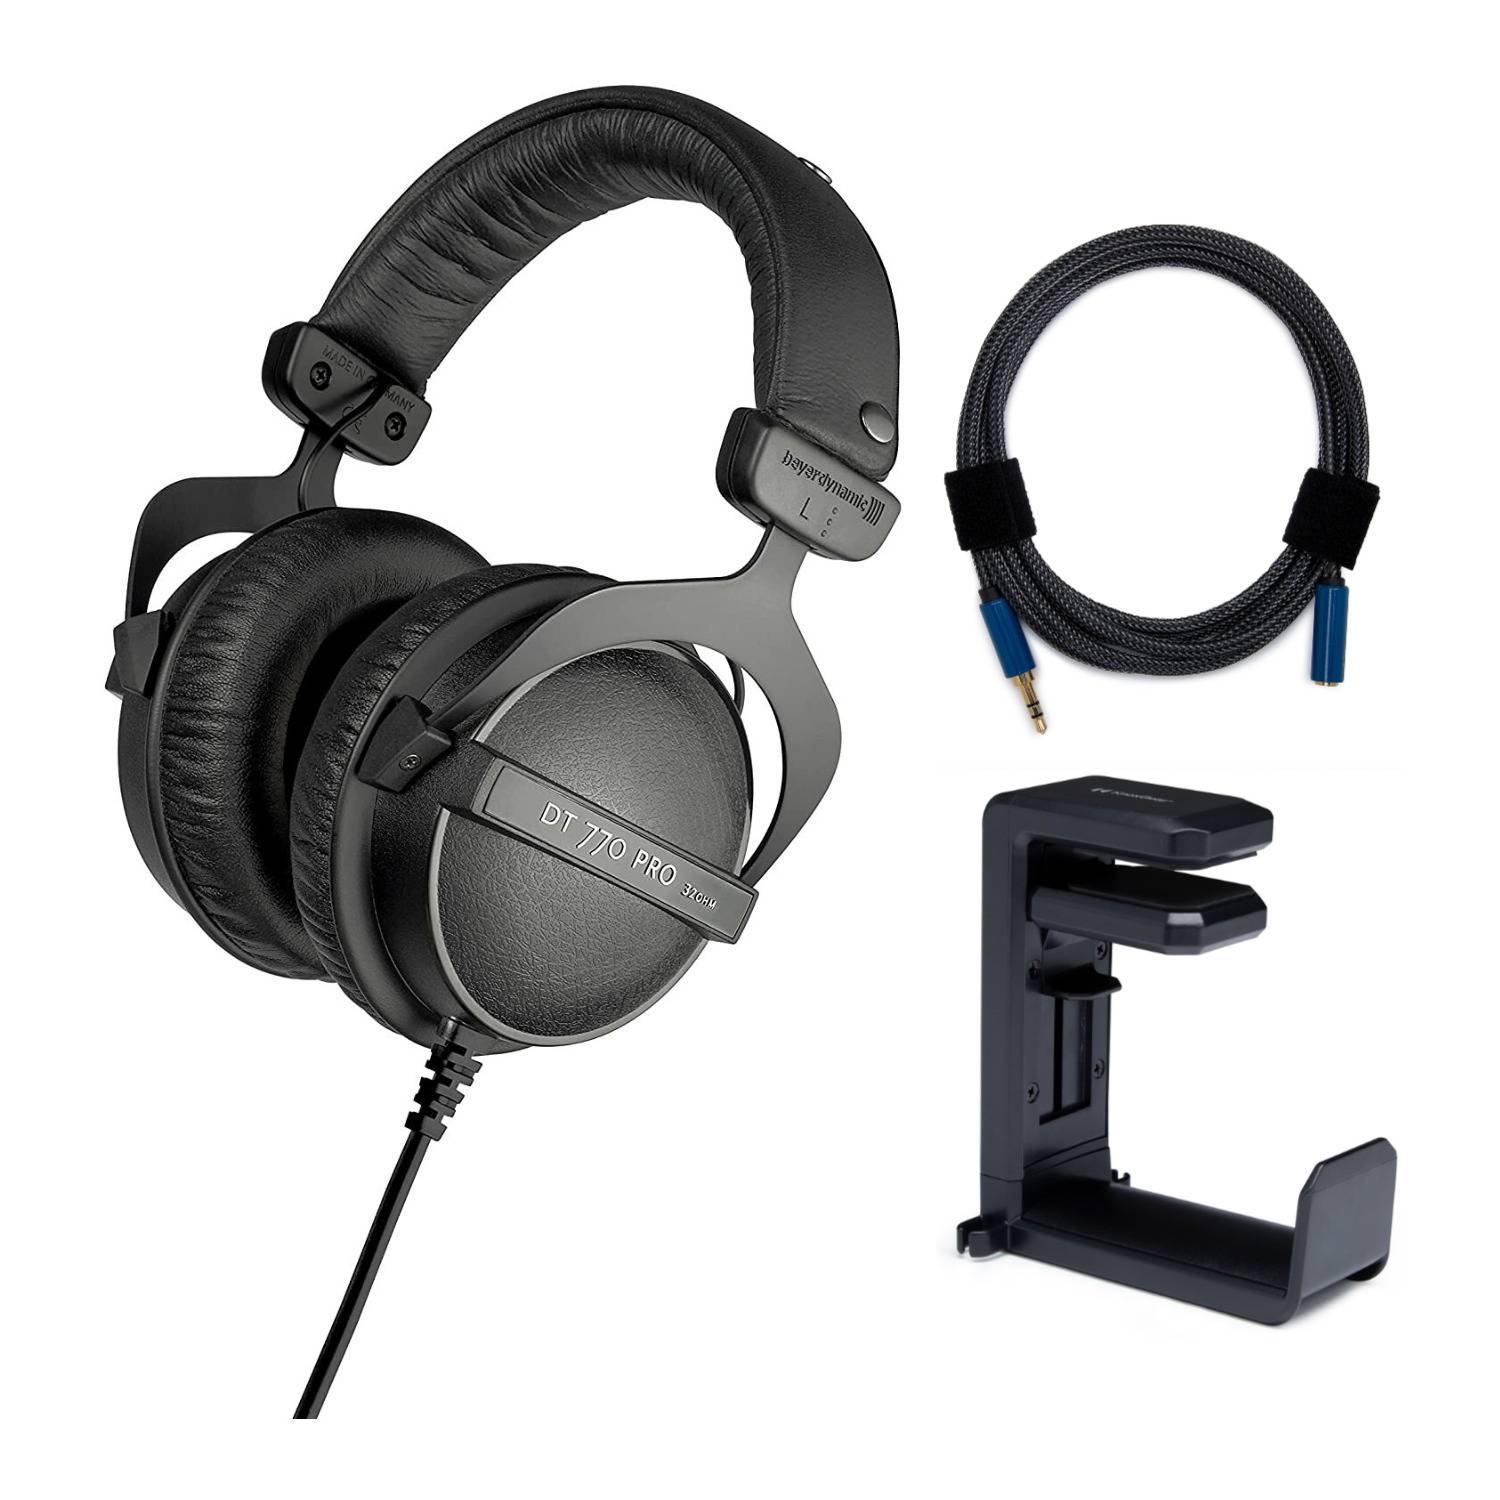 Beyerdynamic DT 770 PRO 32 Ohm Over-Ear Studio Headphone with Knox Gear Headphone Mount Bundle